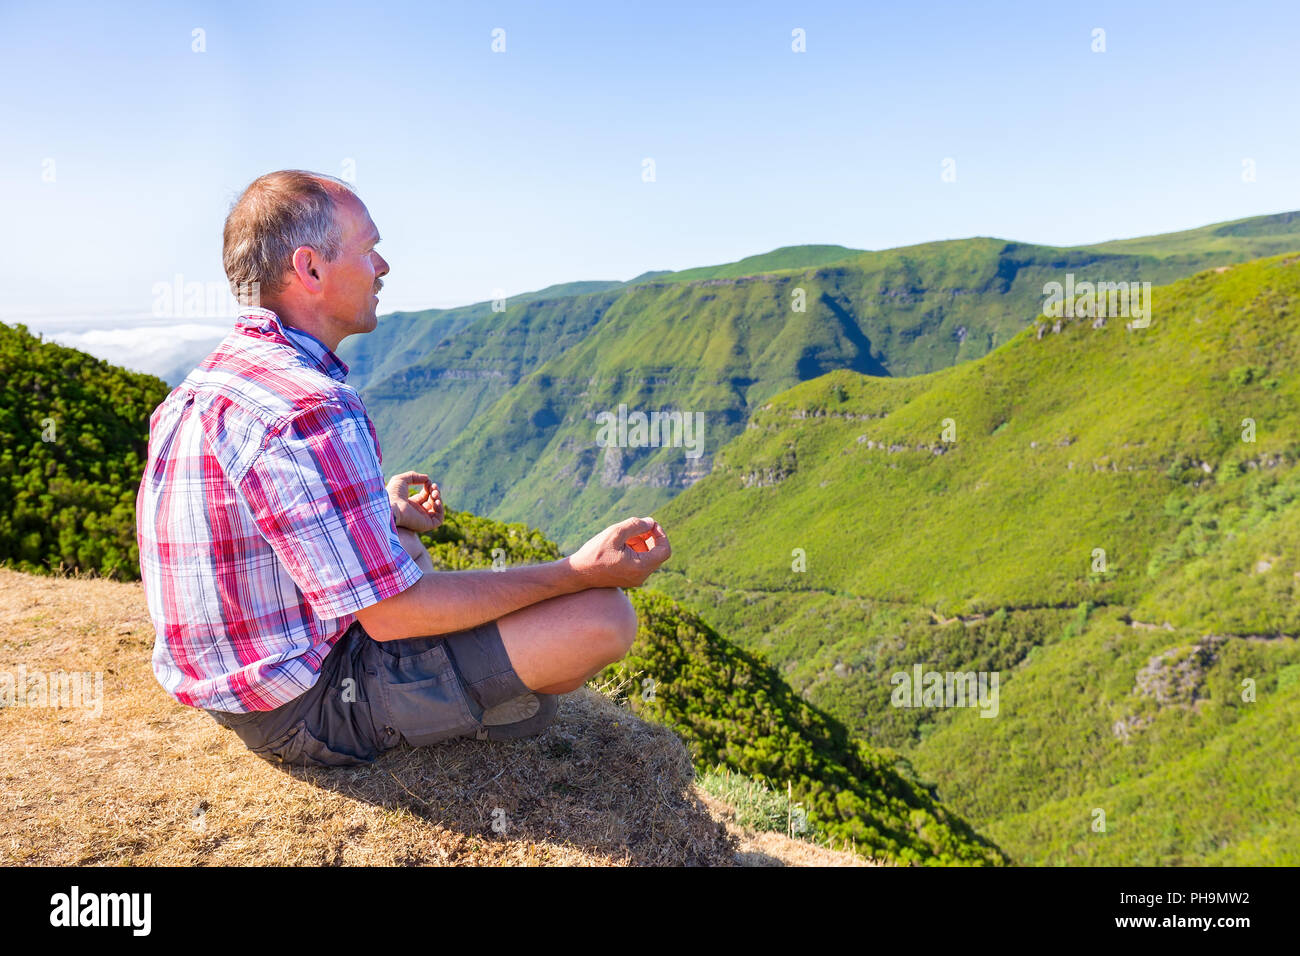 Dutch man meditating on mountain near green valley Stock Photo